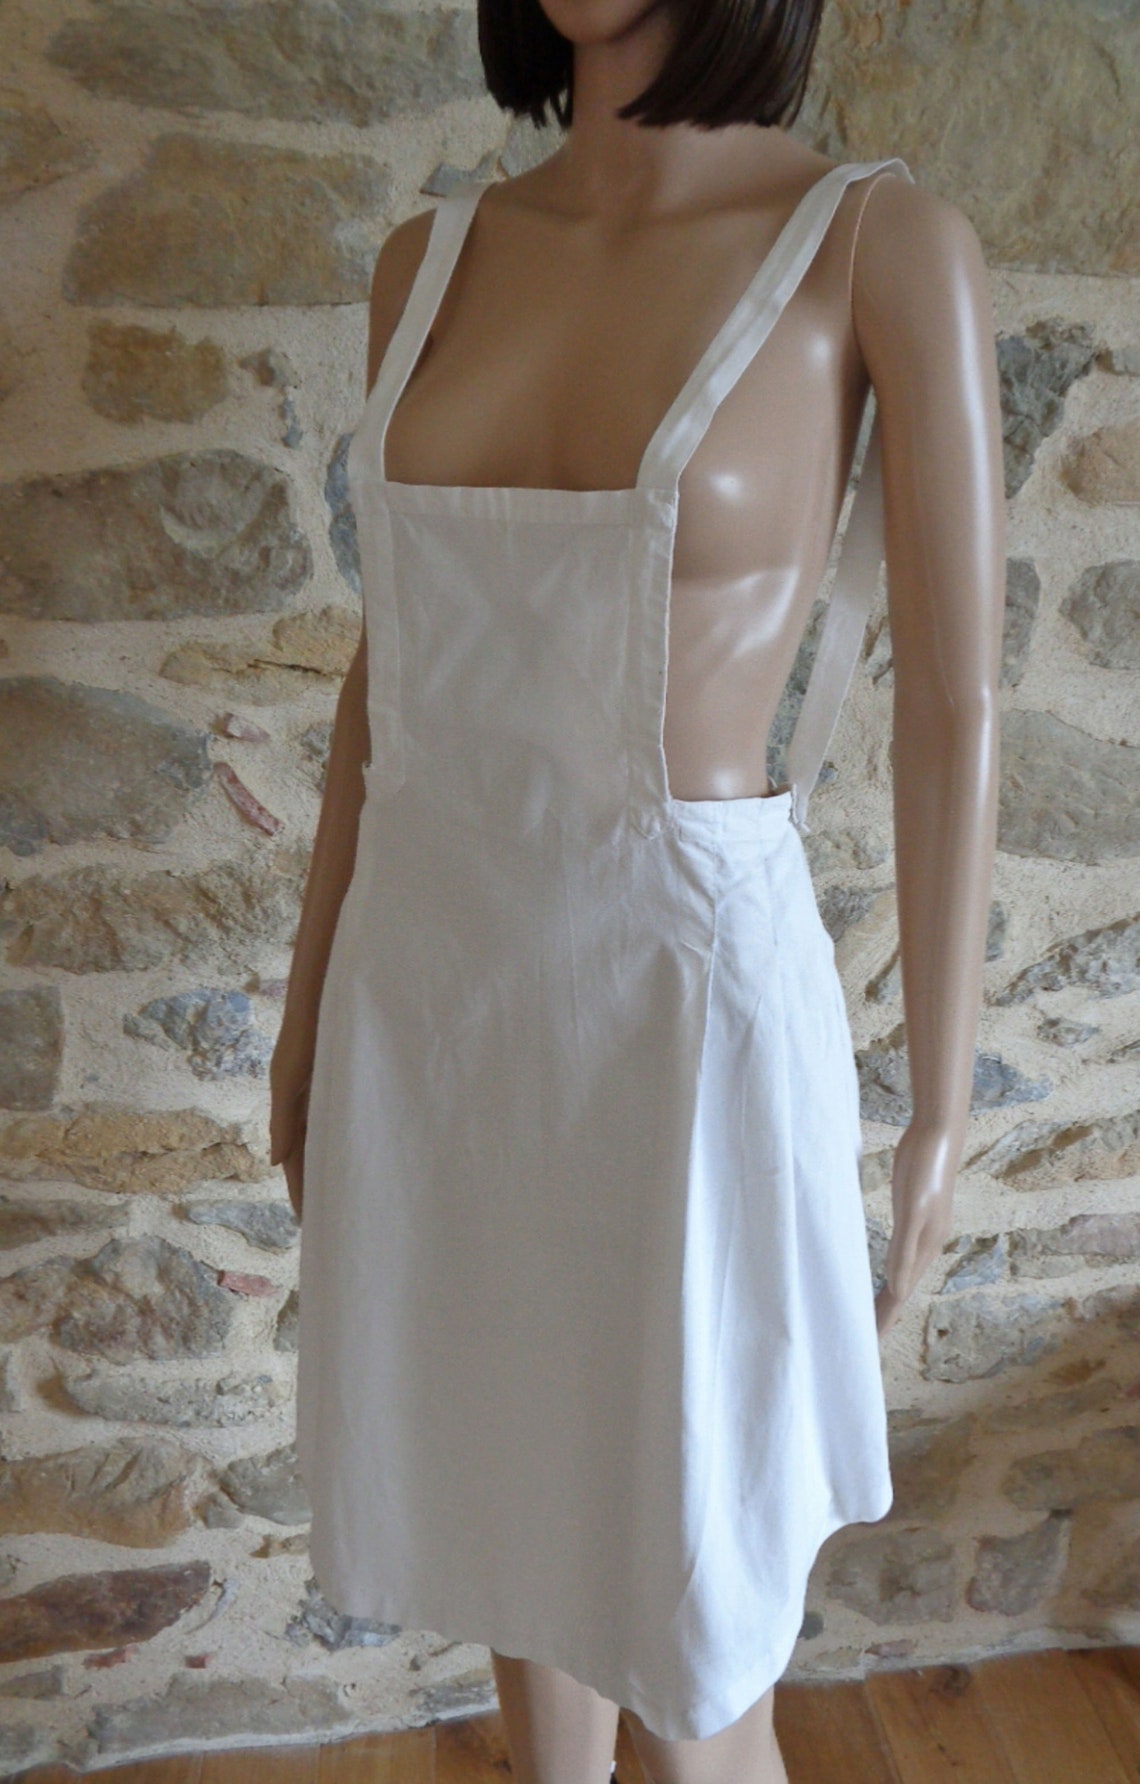 French Maid Apron Vintage White Cotton Bib Pinny | Etsy